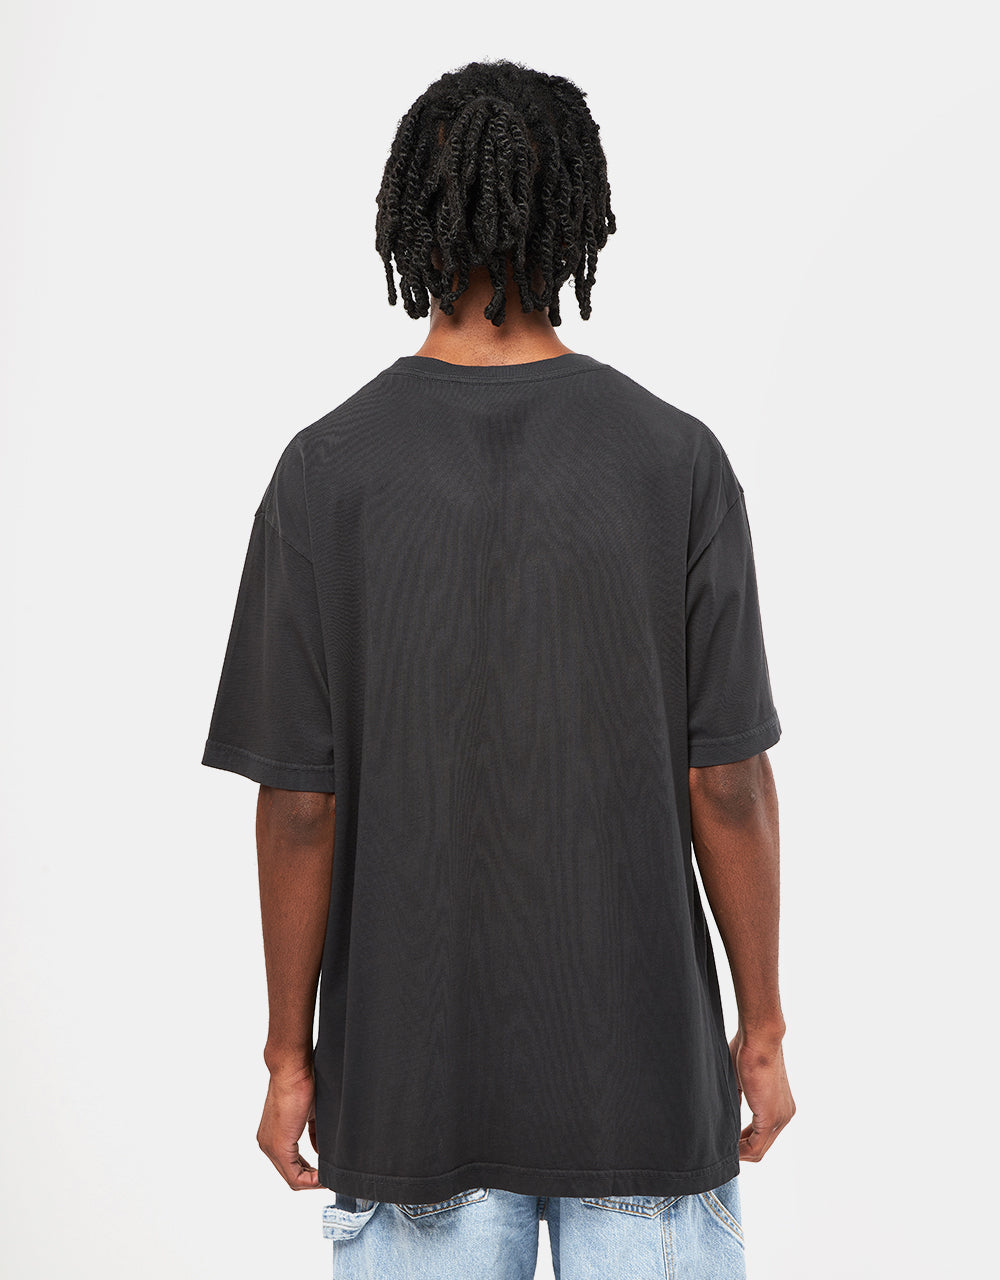 DC Chrome Star T-Shirt - Black Garment Dye